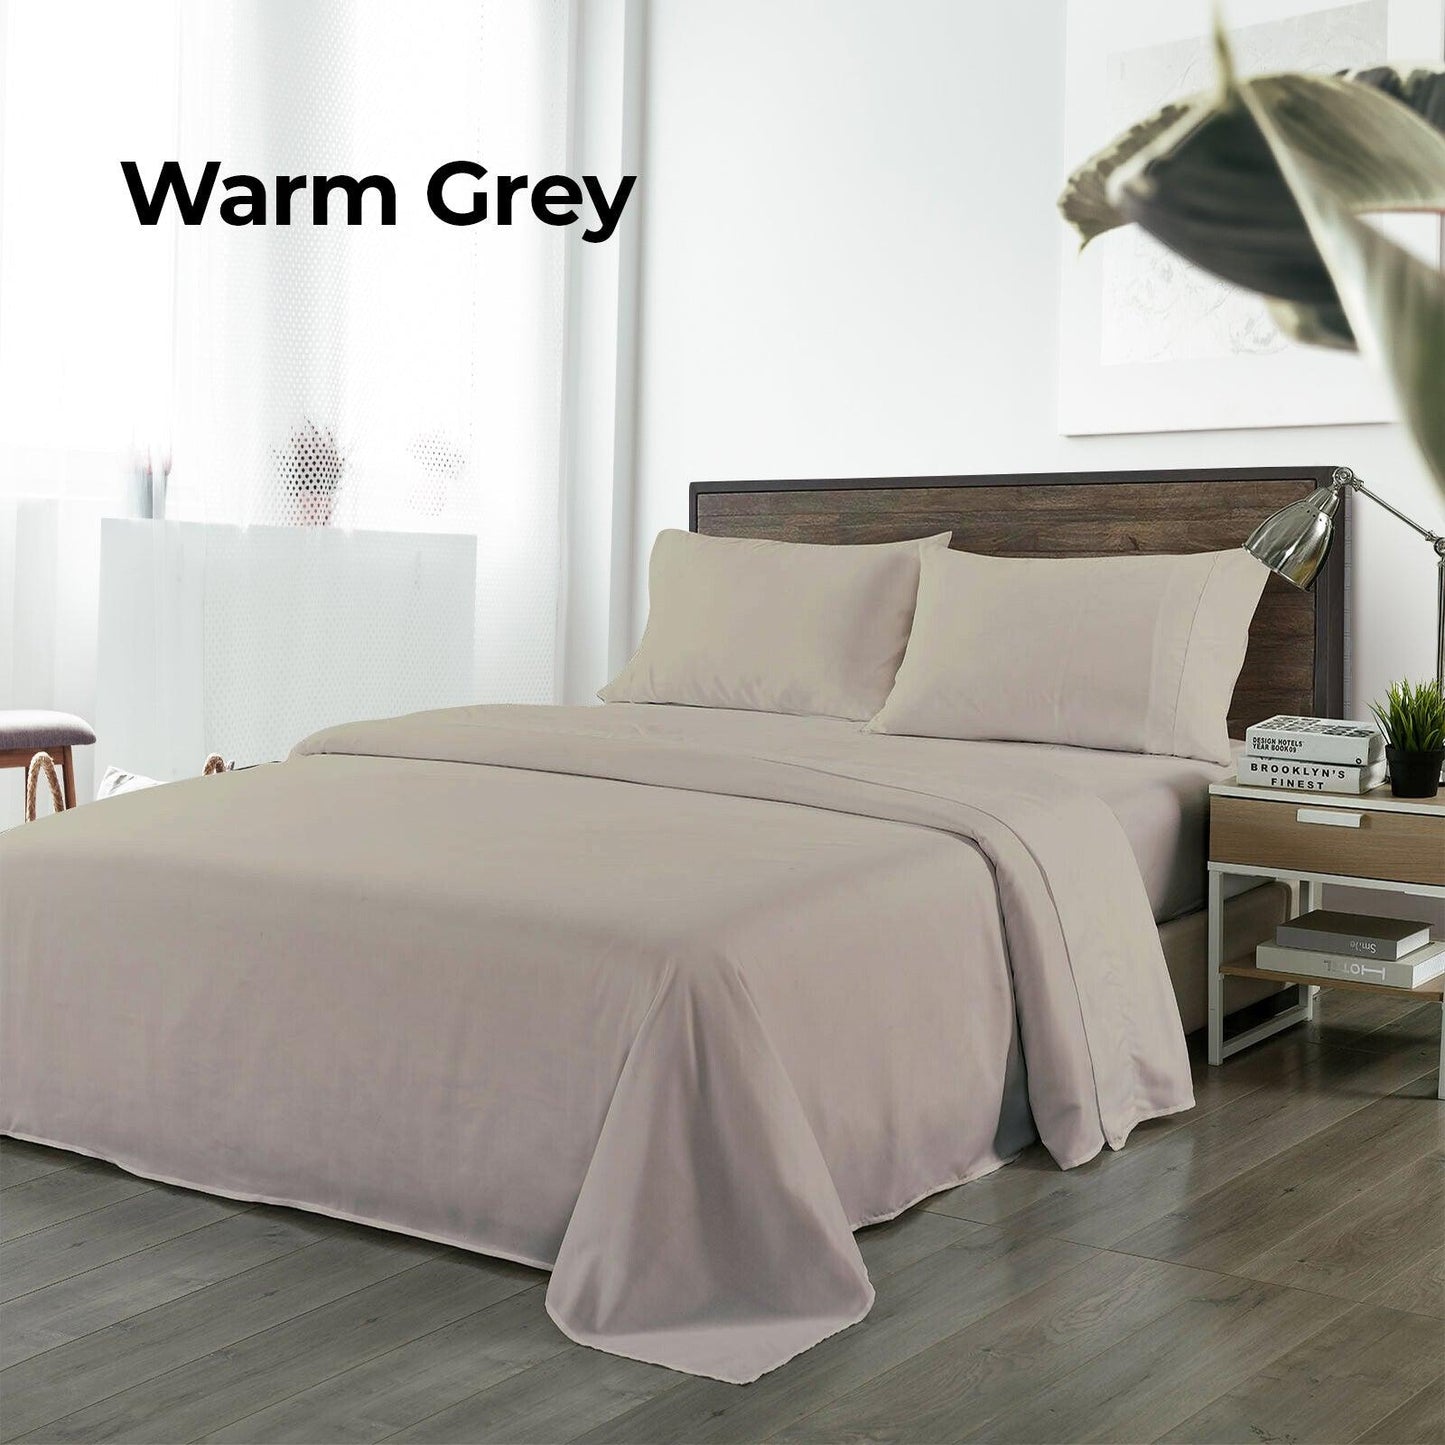 Royal Comfort Bamboo Blended Sheet & Pillowcases Set 1000TC Ultra Soft Bedding - Queen - Warm Grey